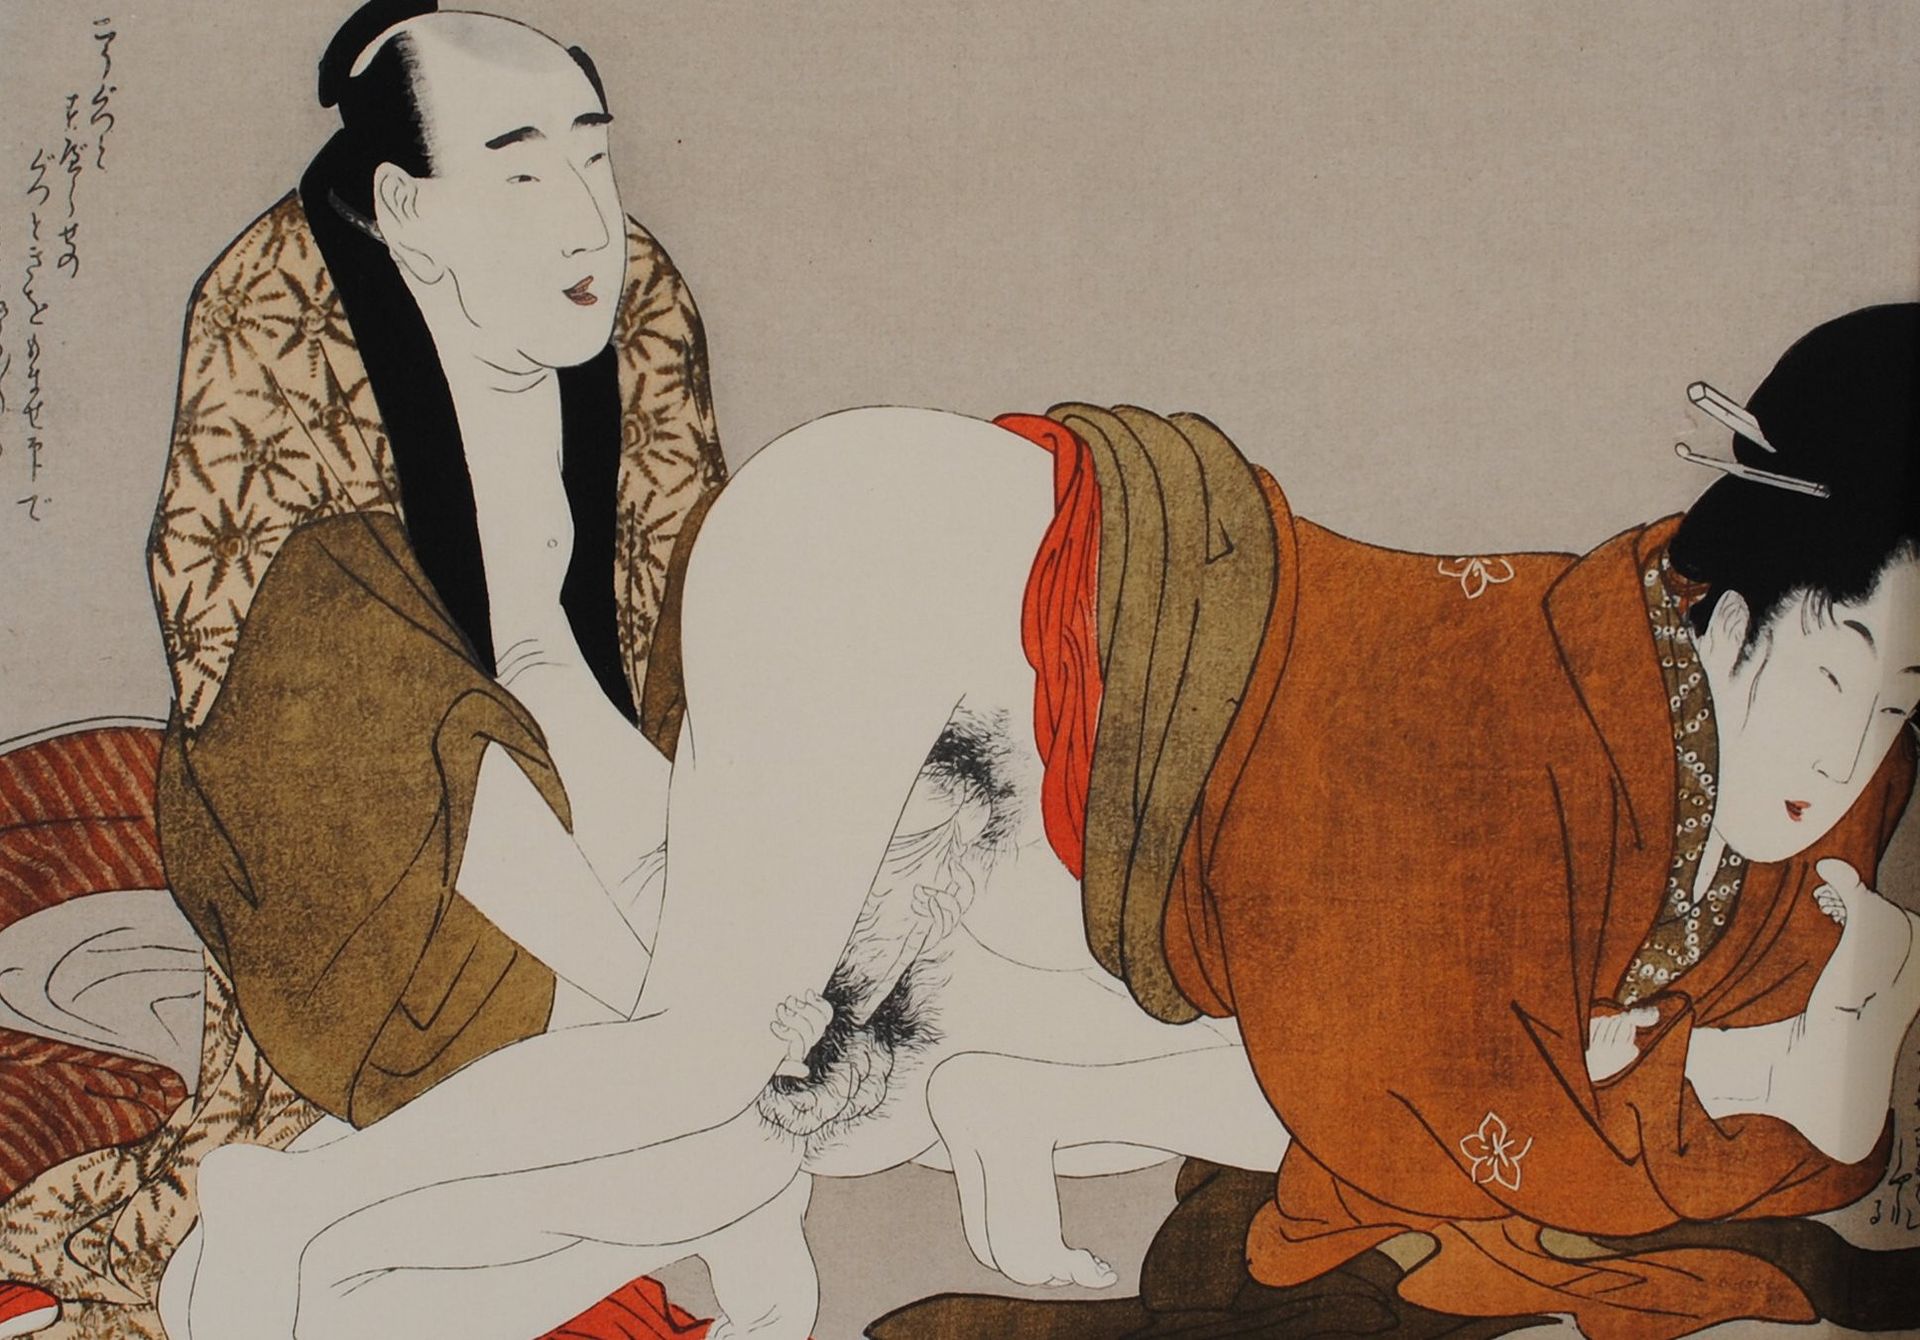 Kitagawa UTAMARO 北川UTAMARO（后） (1753-1806)

实现的愿望

原版印刷品后的情色石版画

在600本上用铅笔编号（编号为8&hellip;